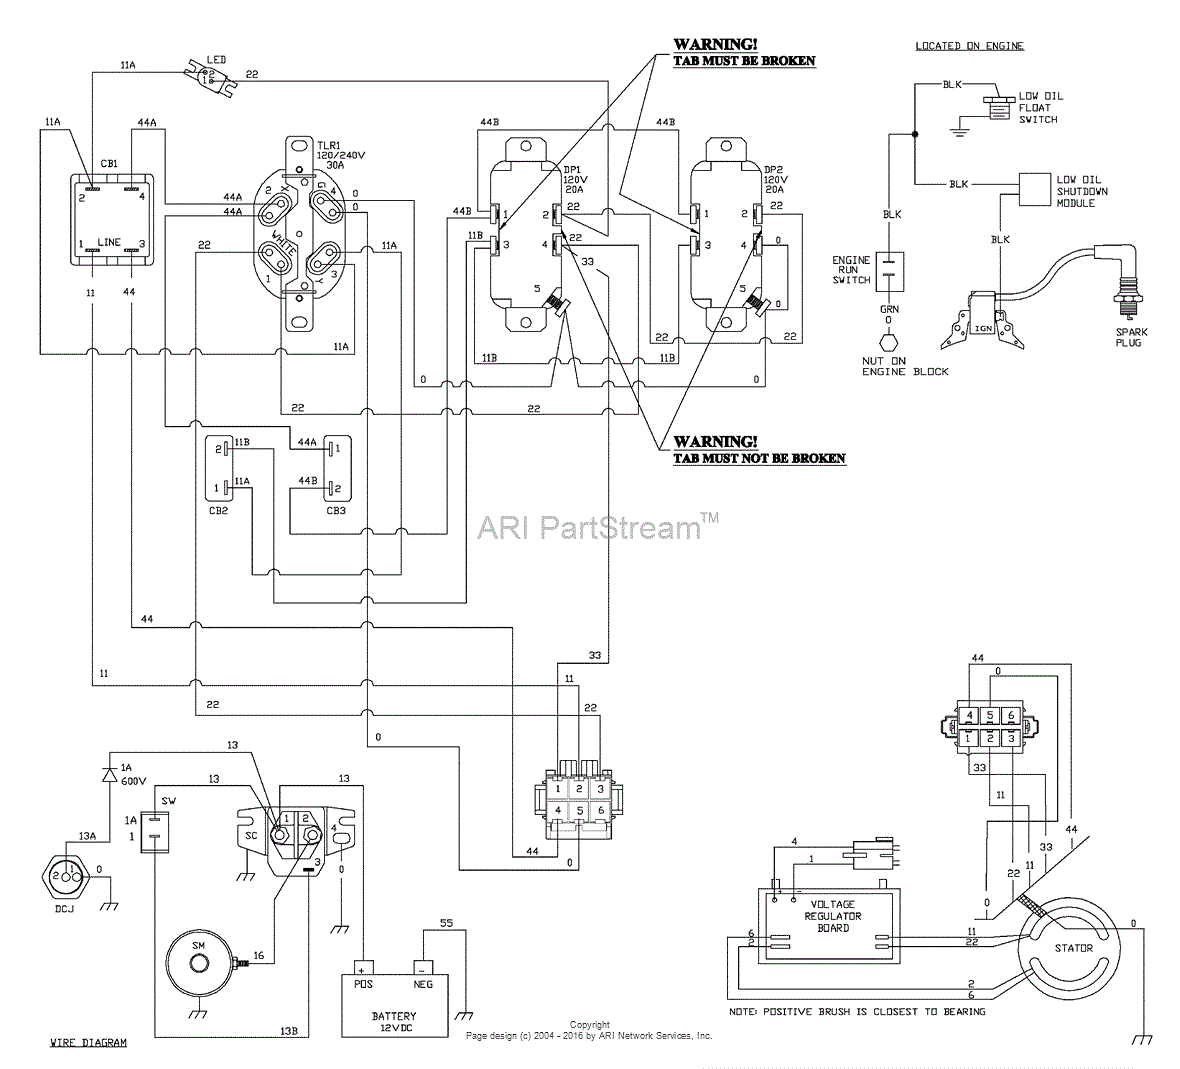 generac guardian 8kw wiring diagram